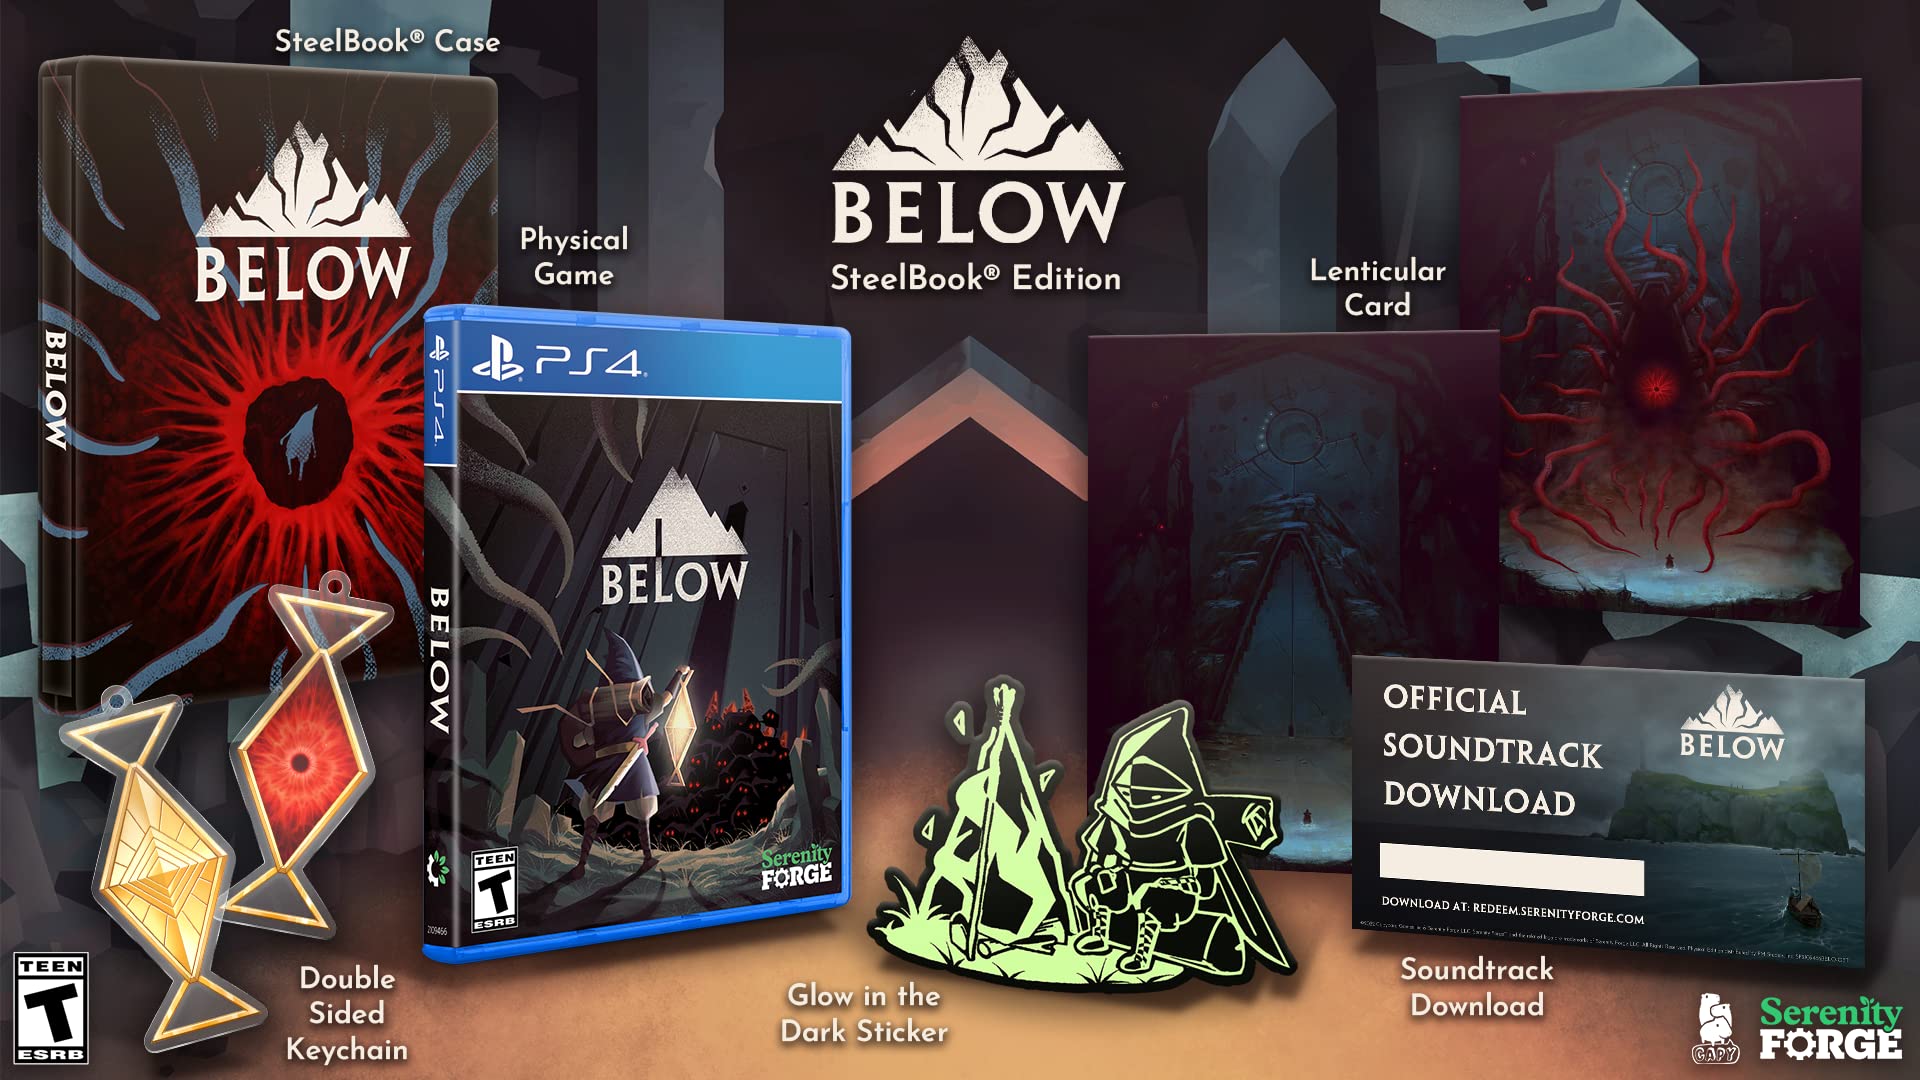 BELOW STEELBOOK EDITION for PlayStation 4